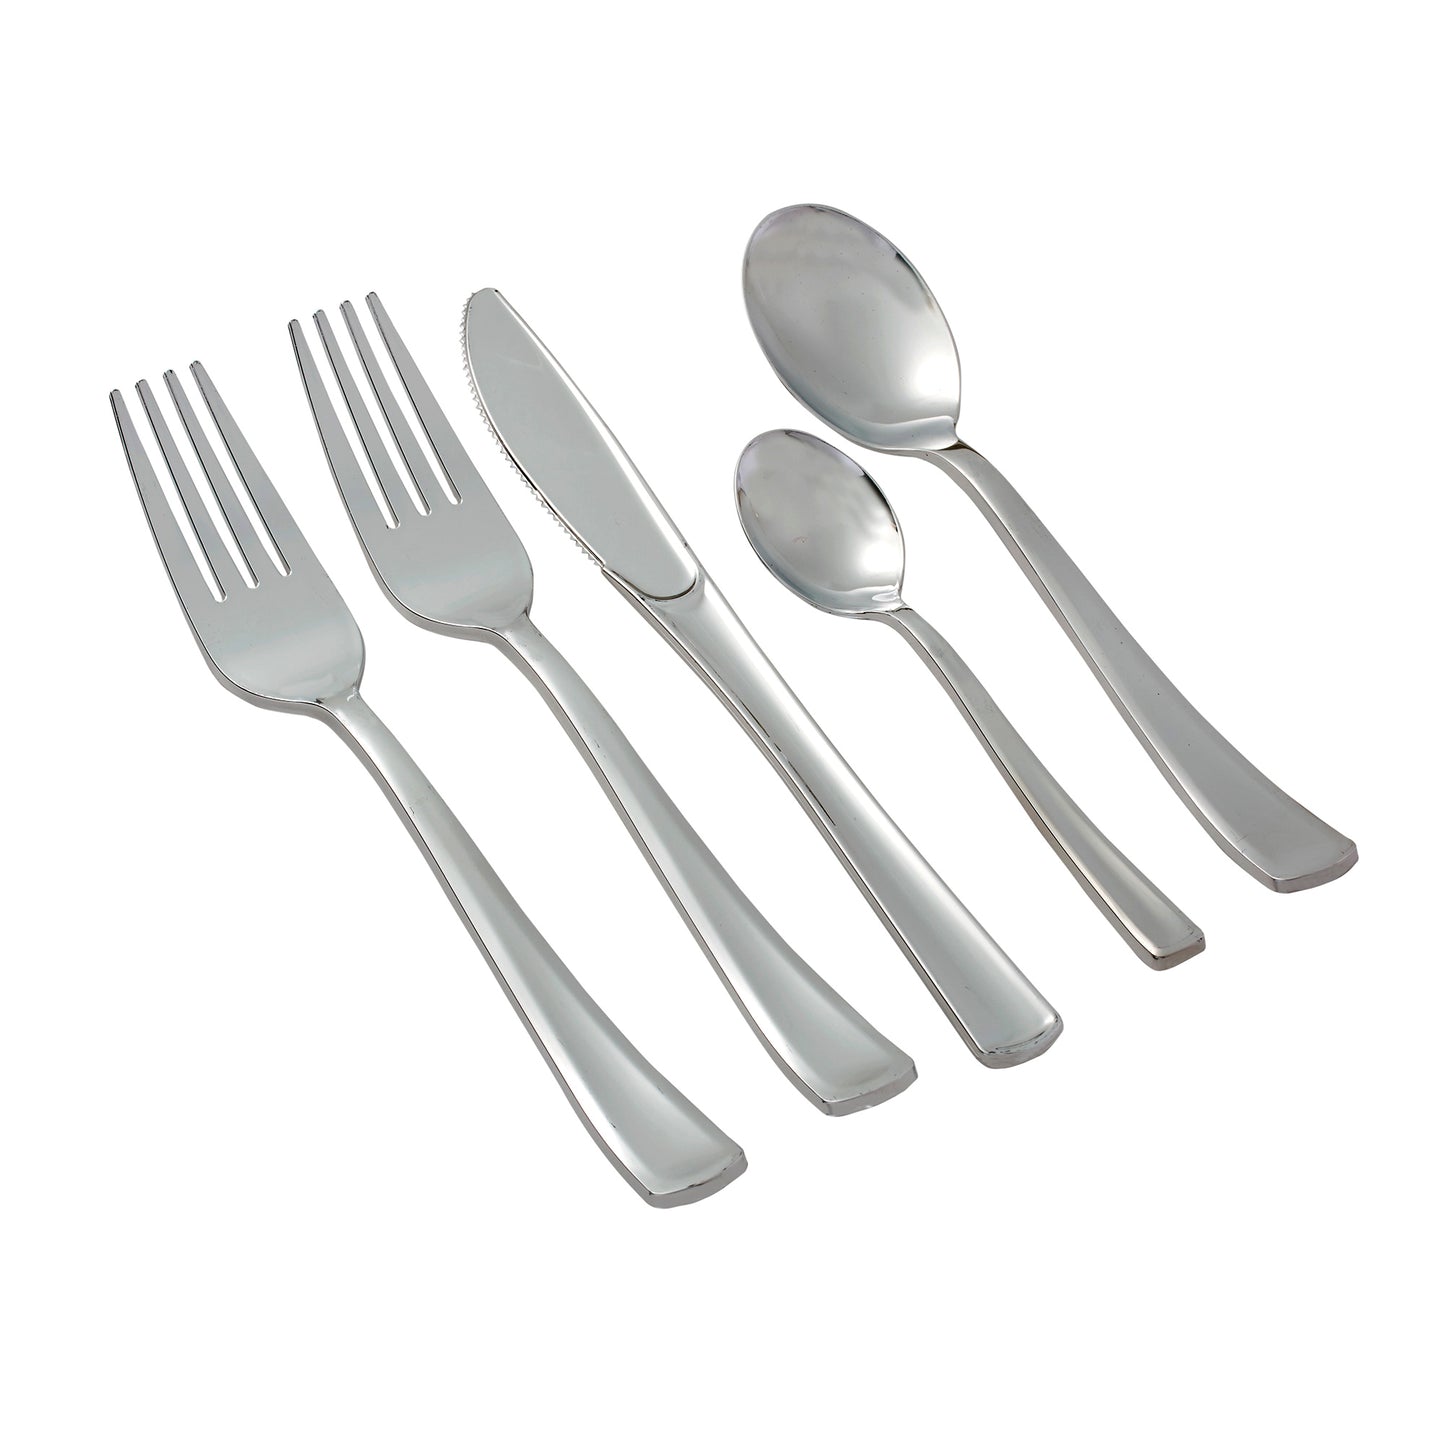 330-Piece black square dinnerware set for 40 guests Includes: 80 white square plastic plates & 250 silver-colored silverware utensils